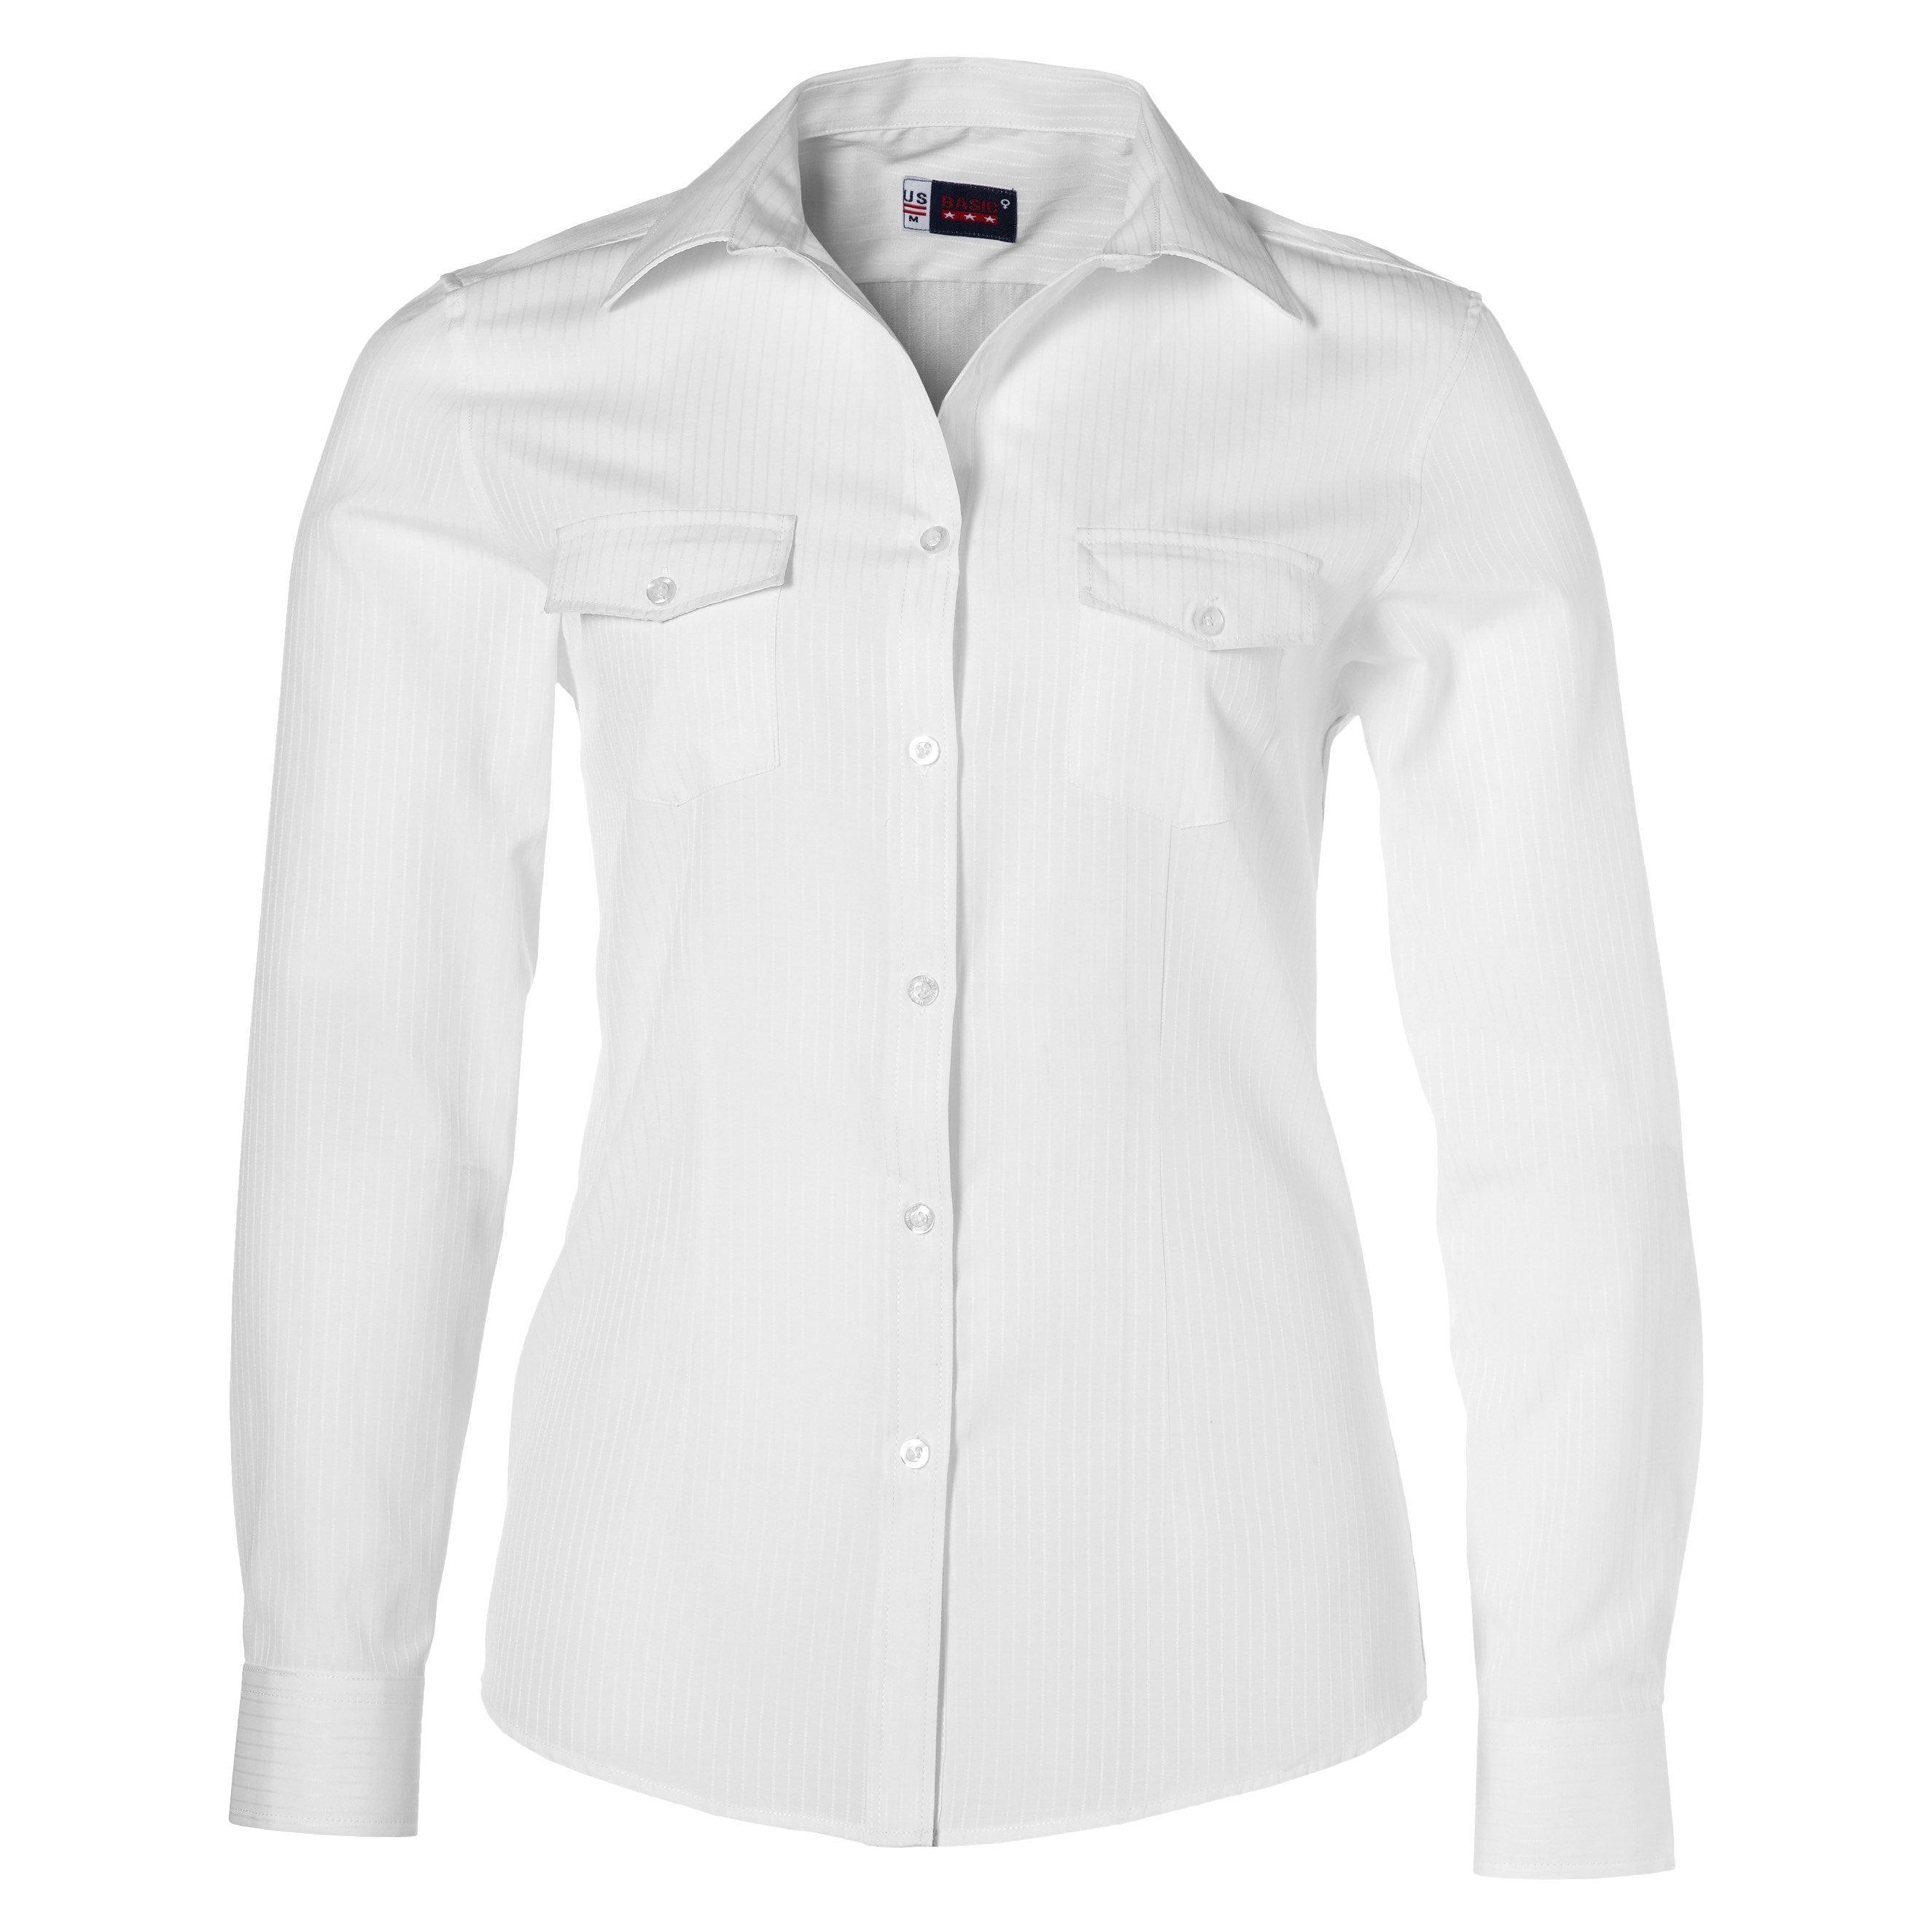 Ladies Long Sleeve Bayport Shirt - Black Only-2XL-White-W